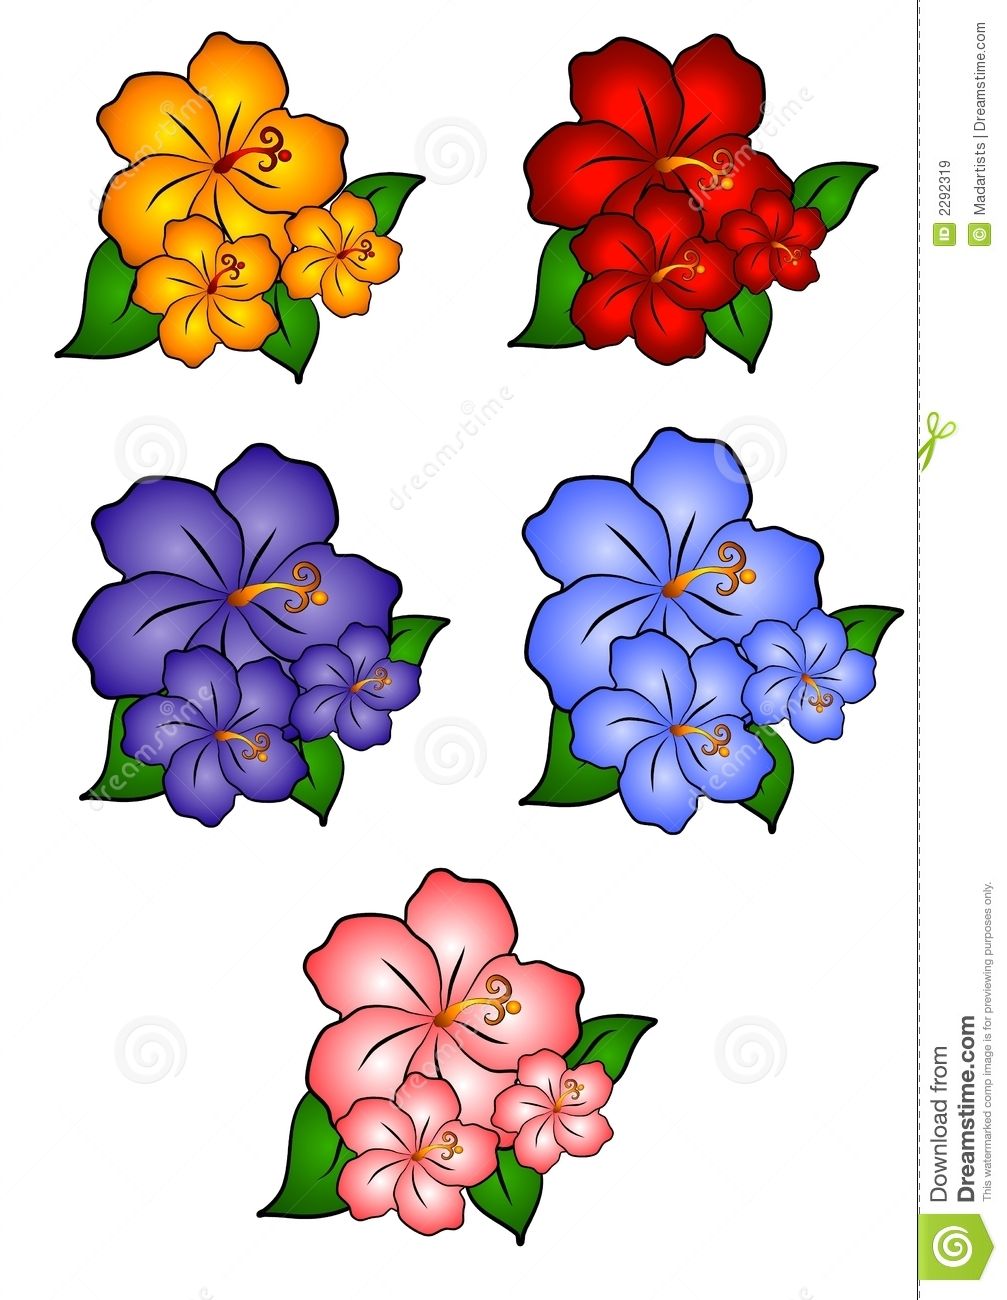 Flower clip art free